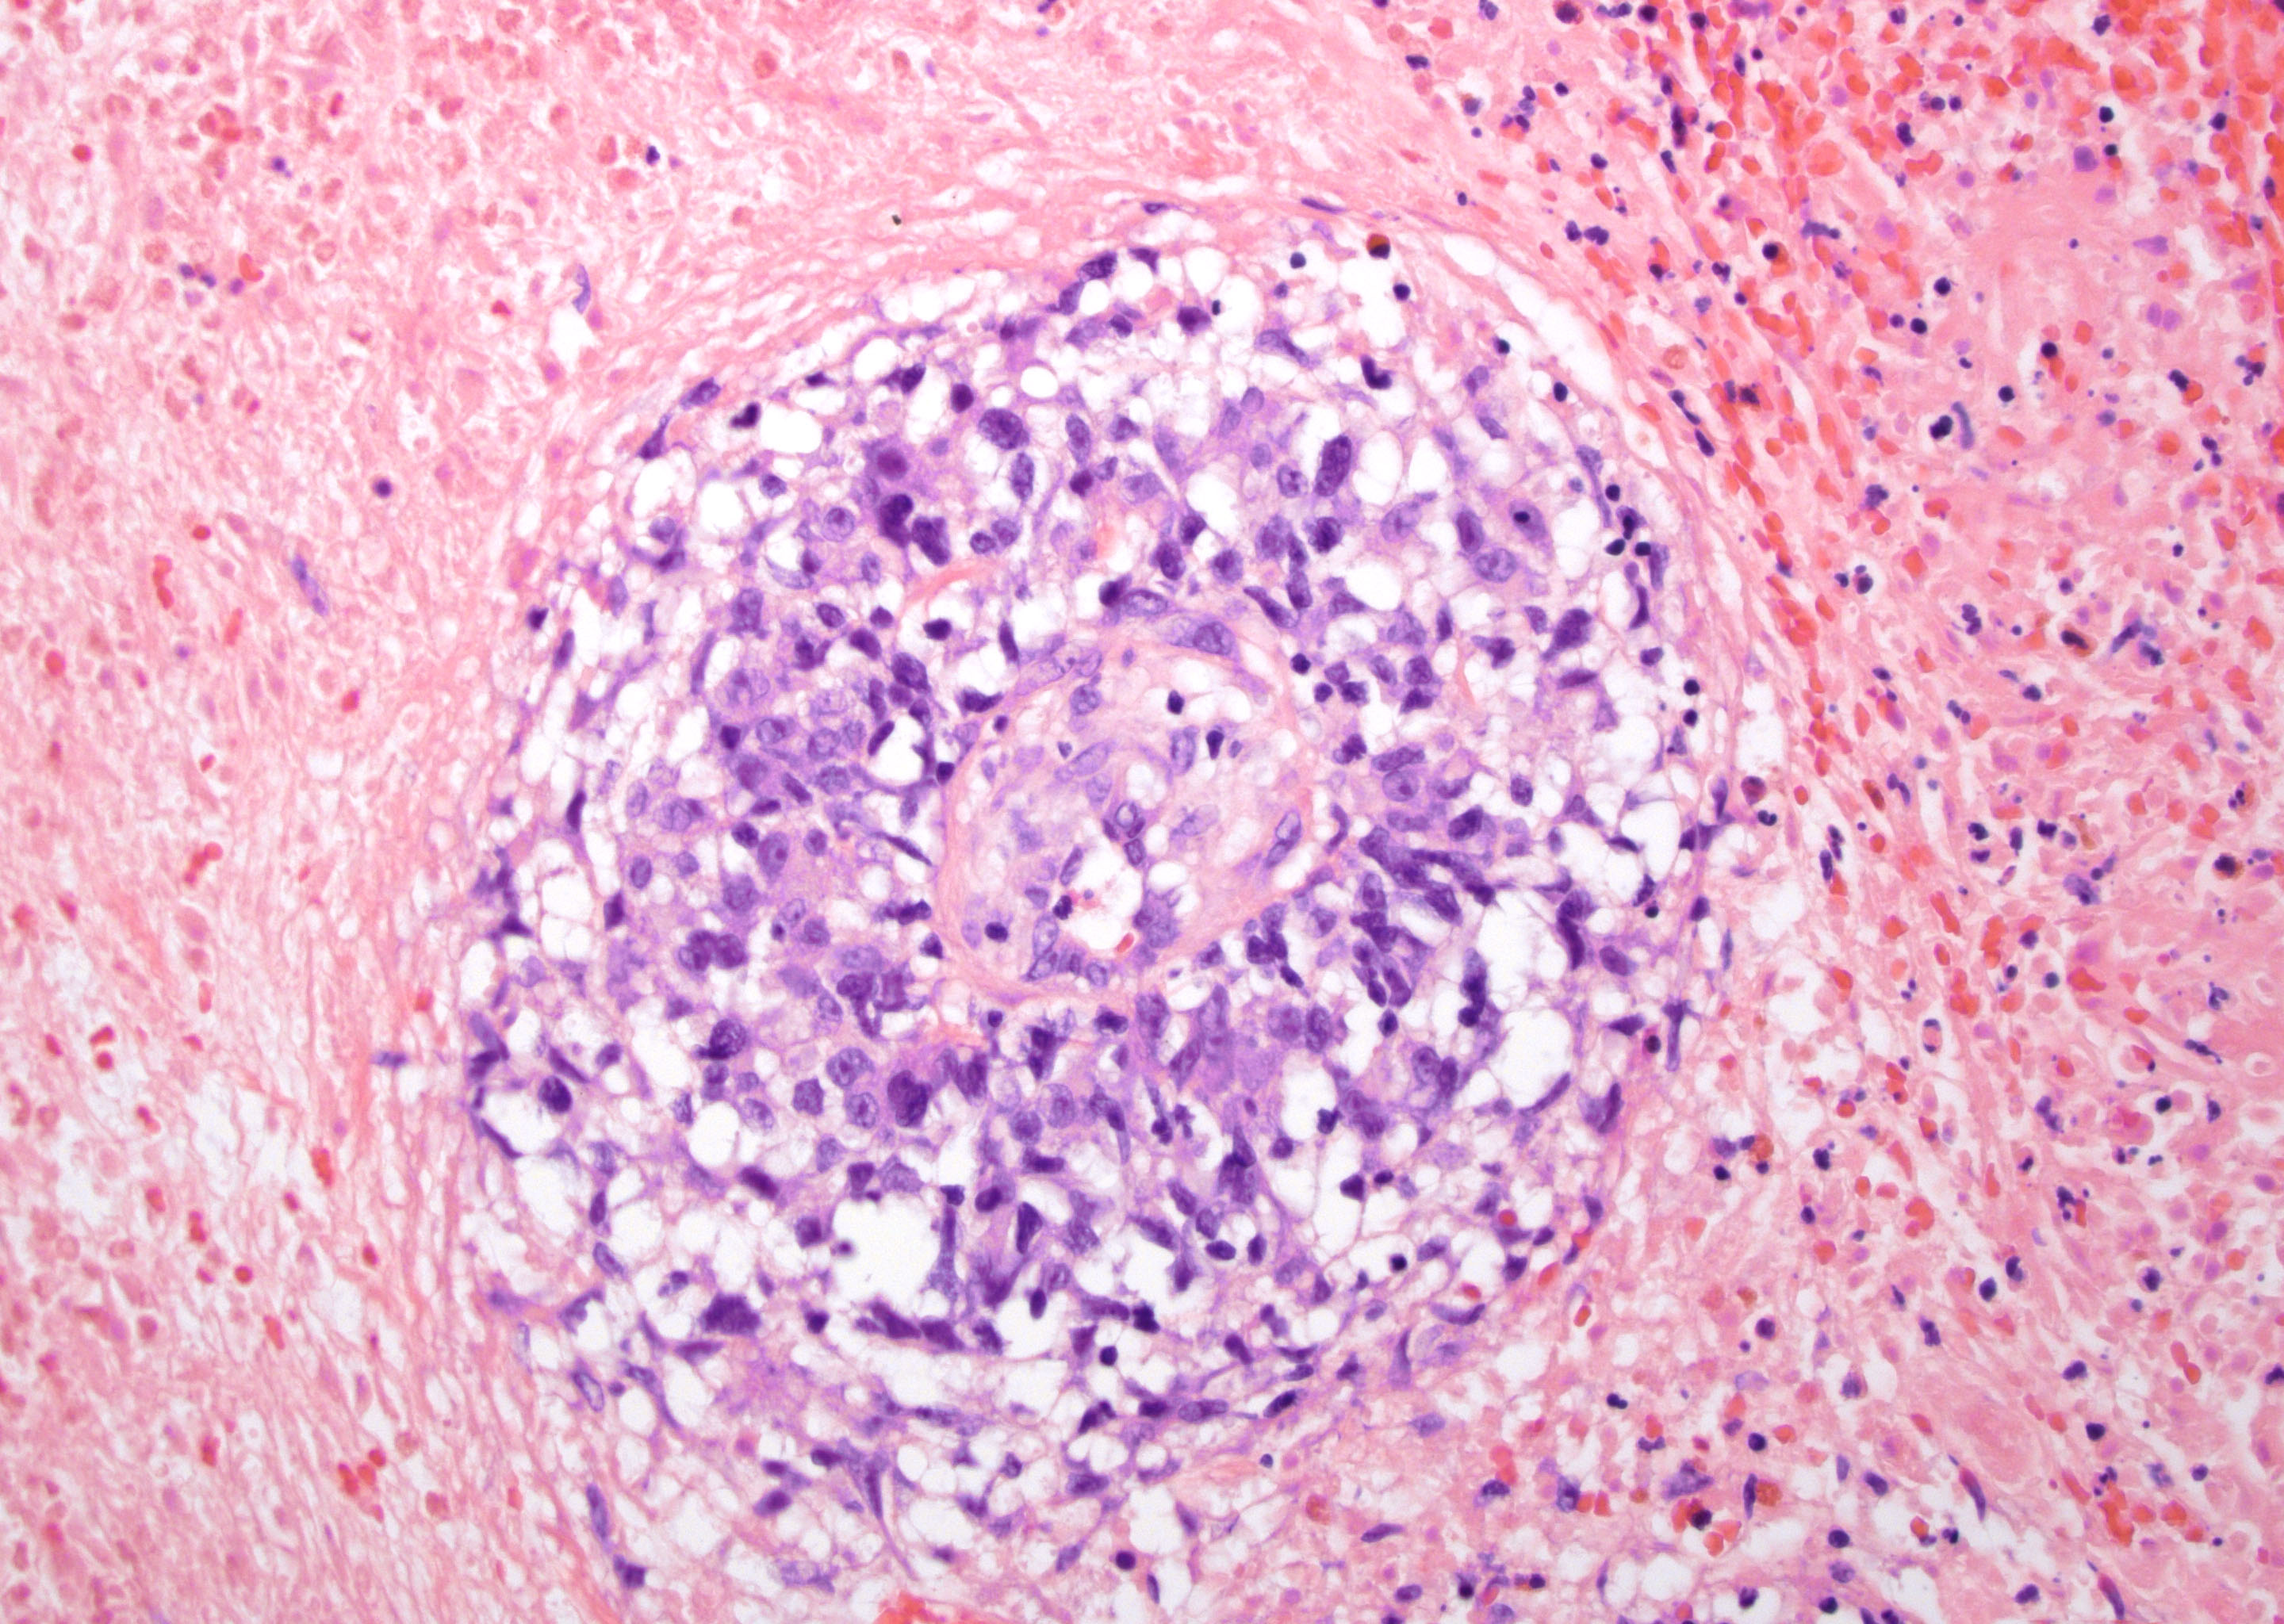 Lymphomatoid papillomatosis pathology - Lymphomatoid papillomatosis pathology